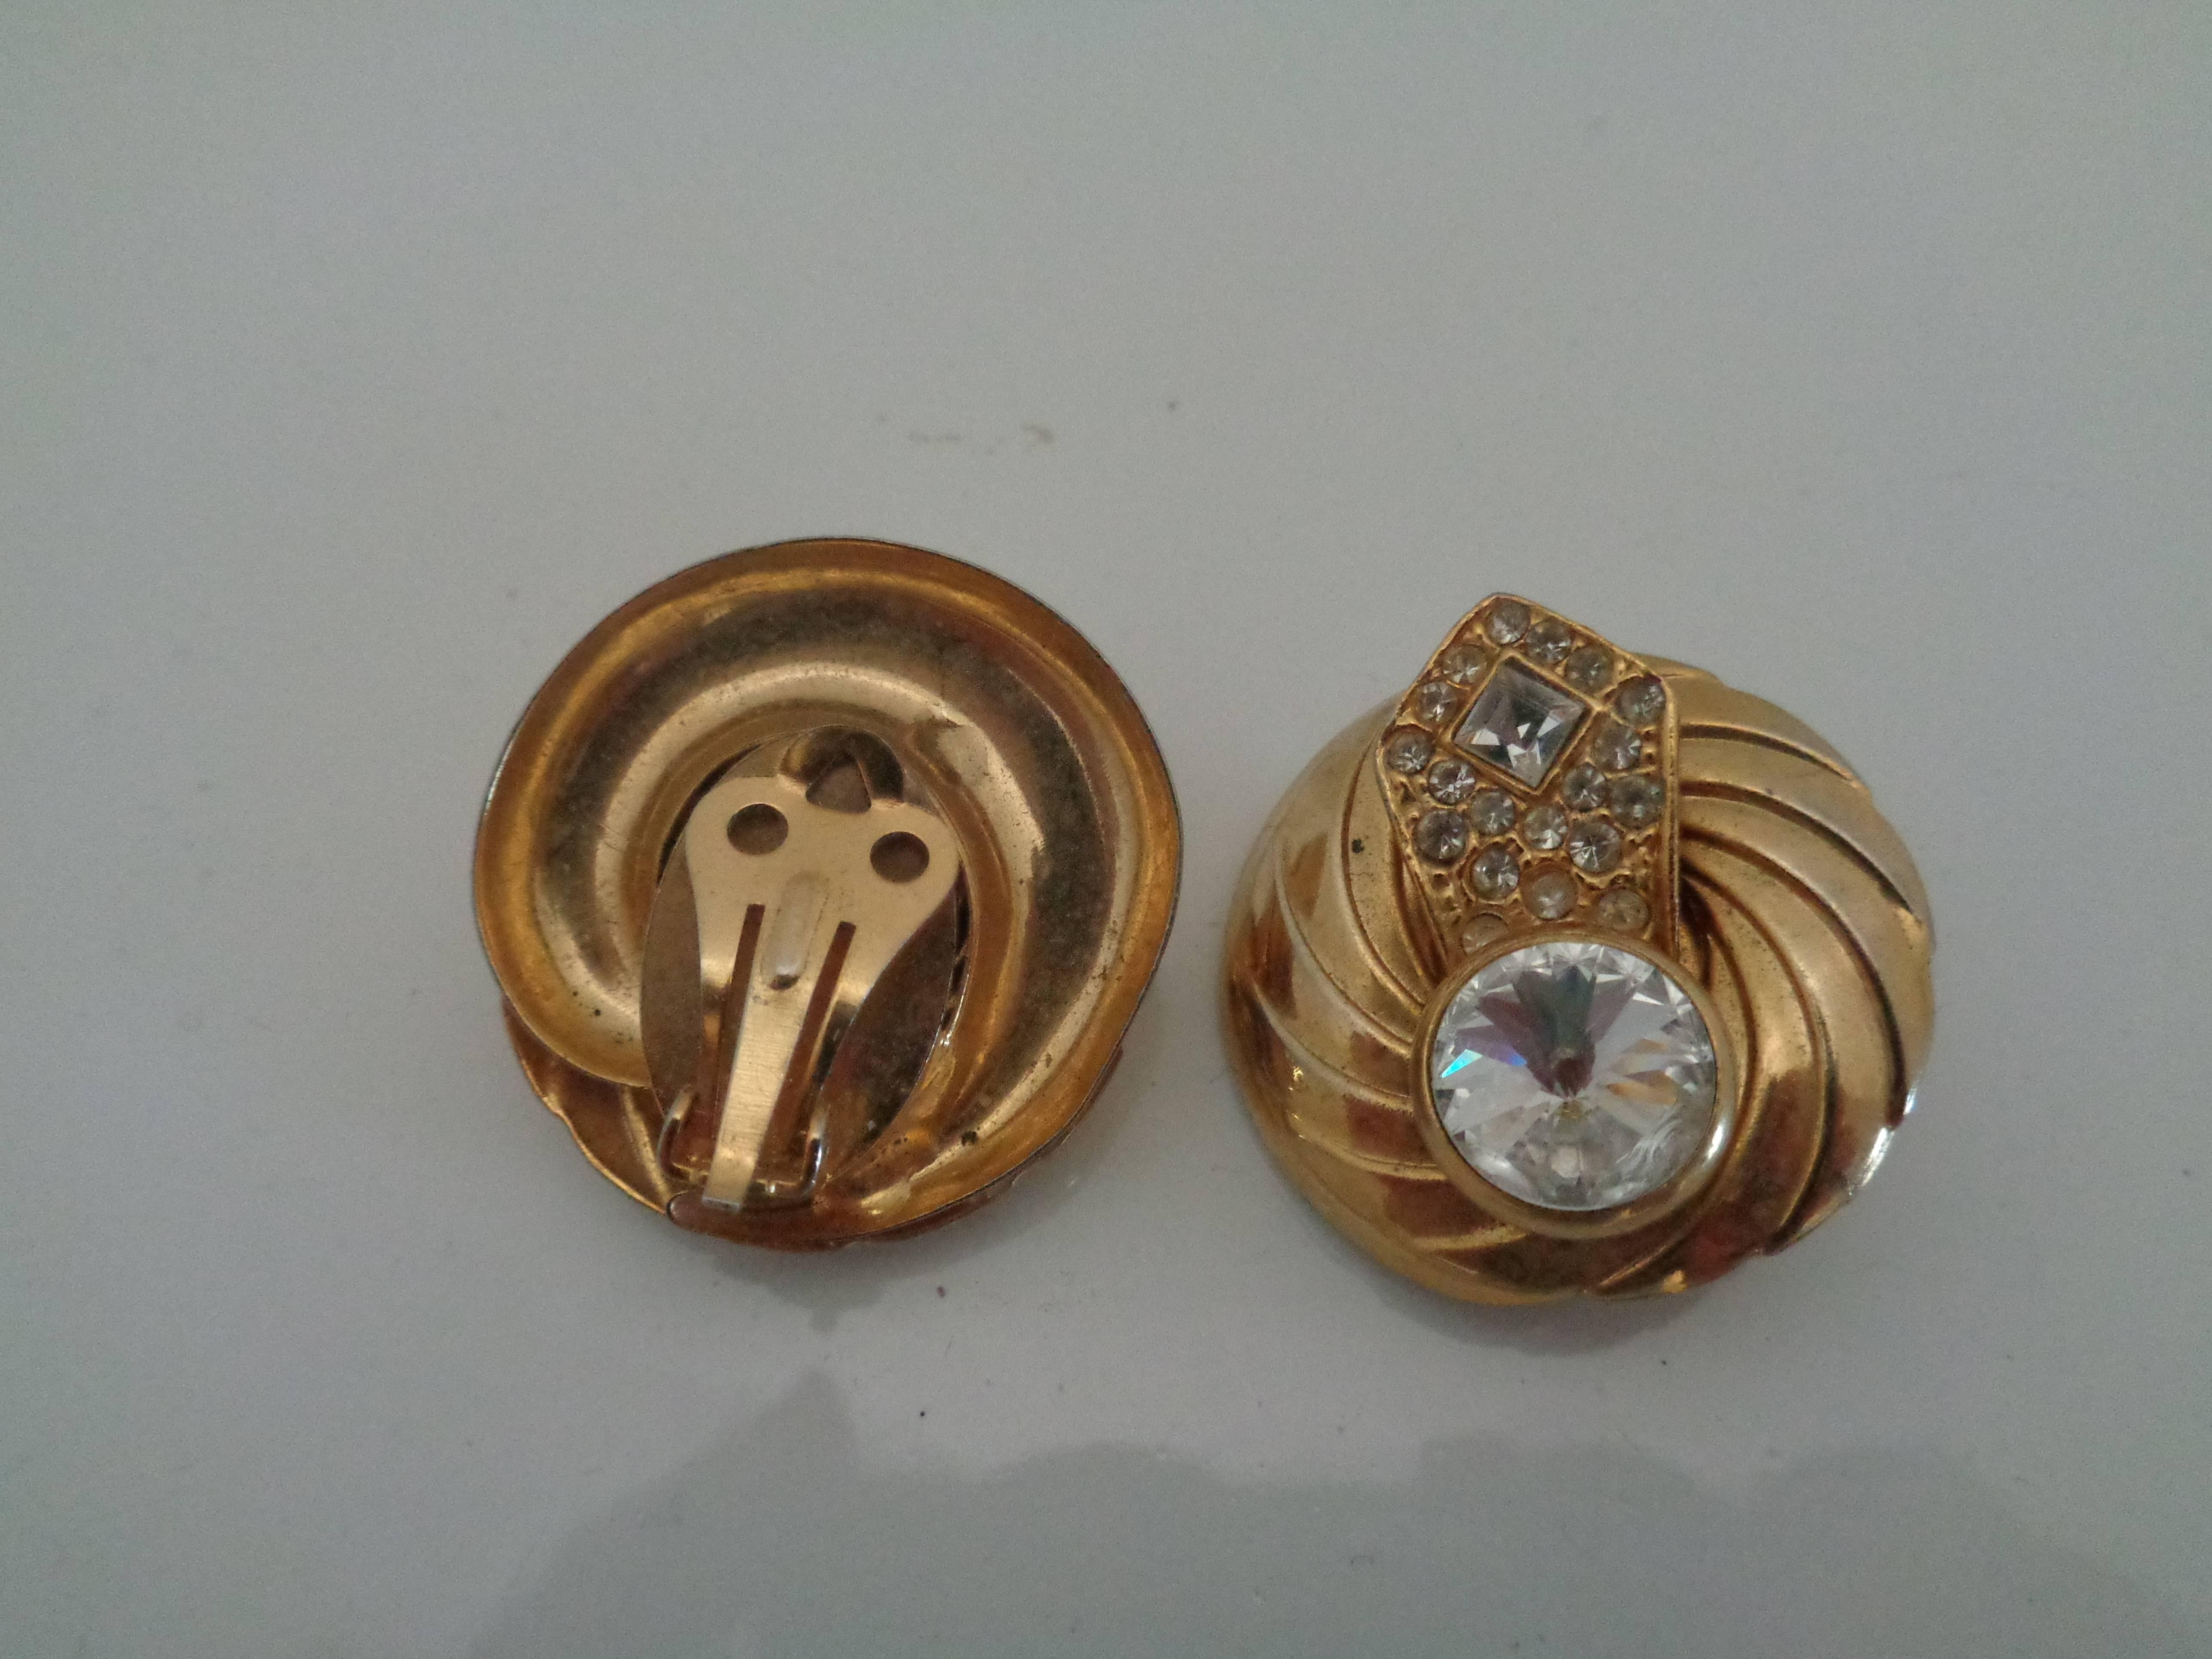 1990s Gold tone Swarovski clip on earrings
measurements 3 x 3 cm